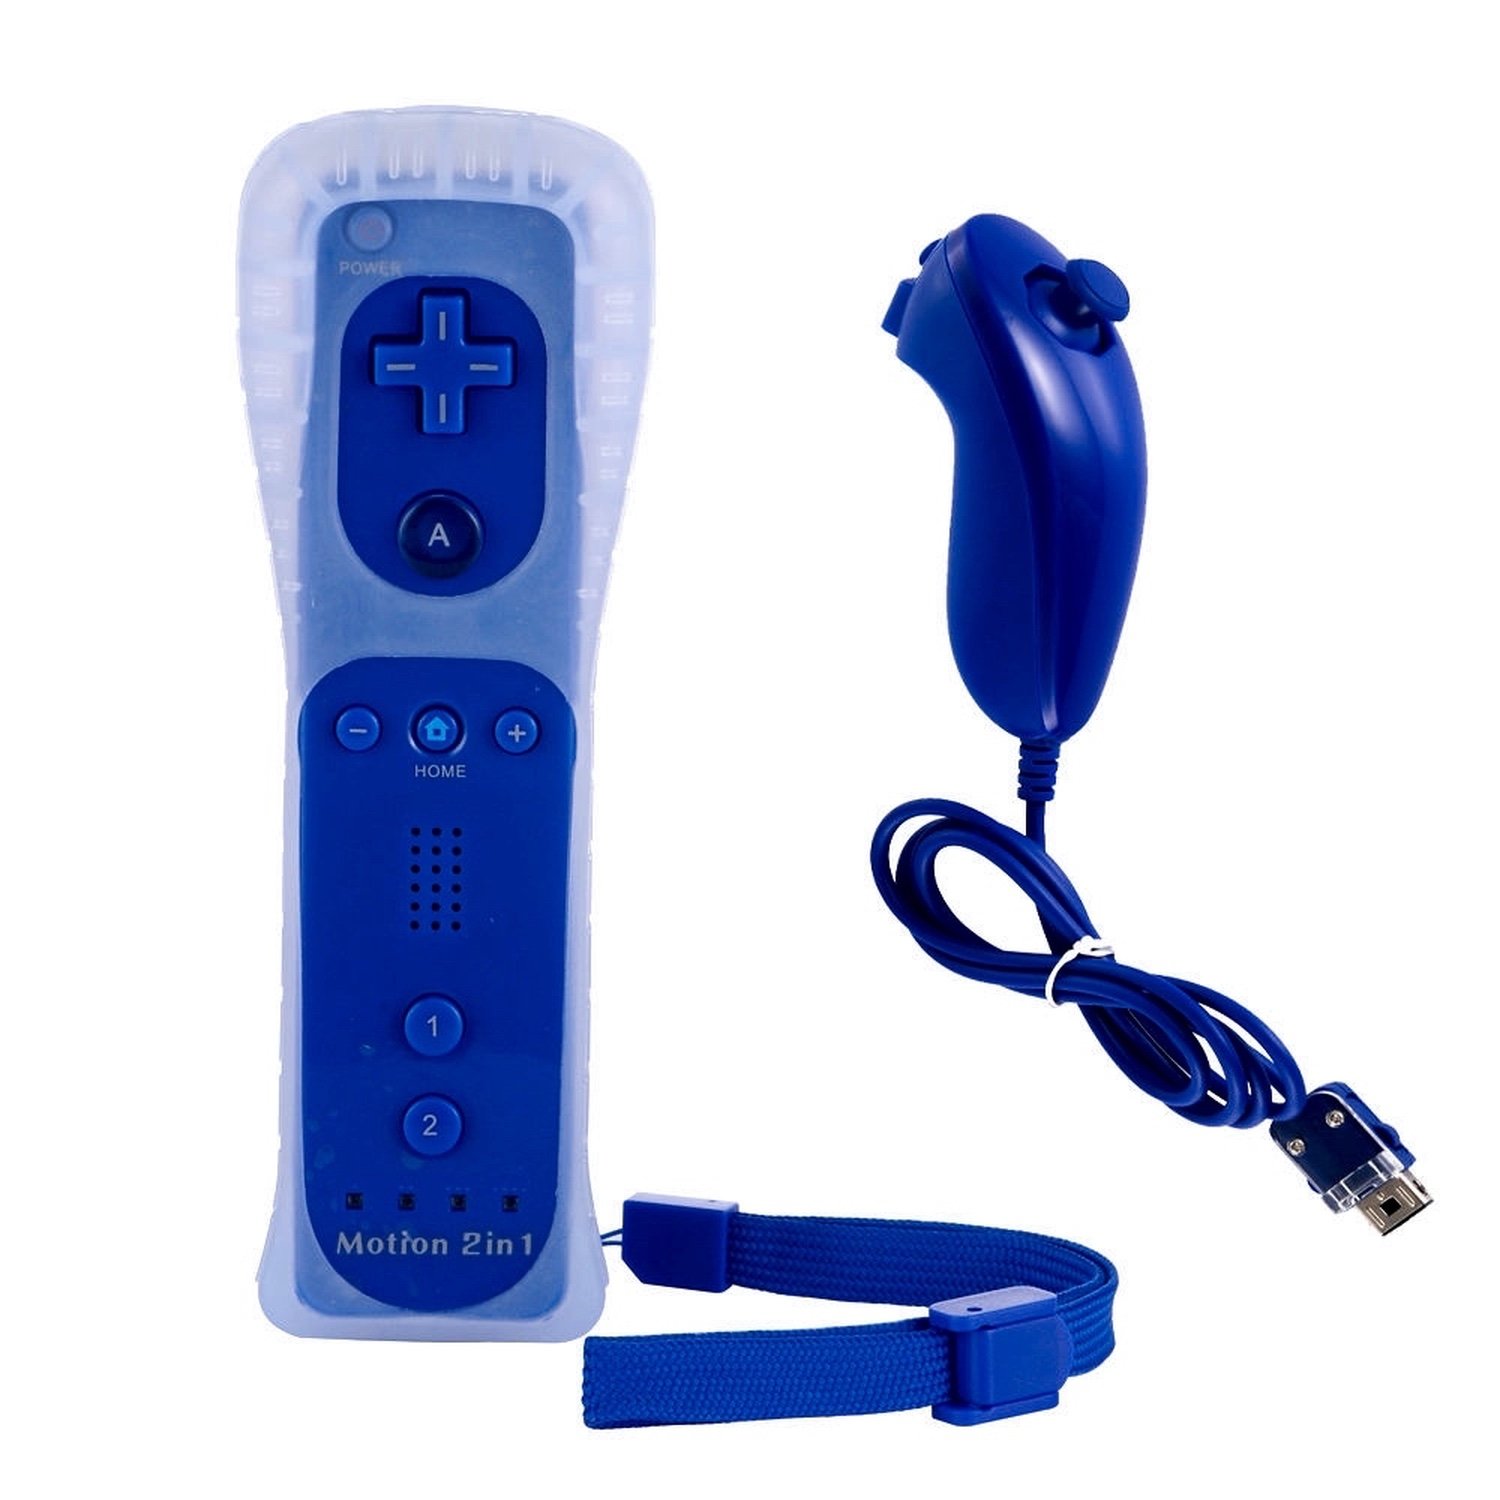 Pack Wii Remote Controller Motion Plus + Nunchuck Compatibel Wii Blauwe Kleur